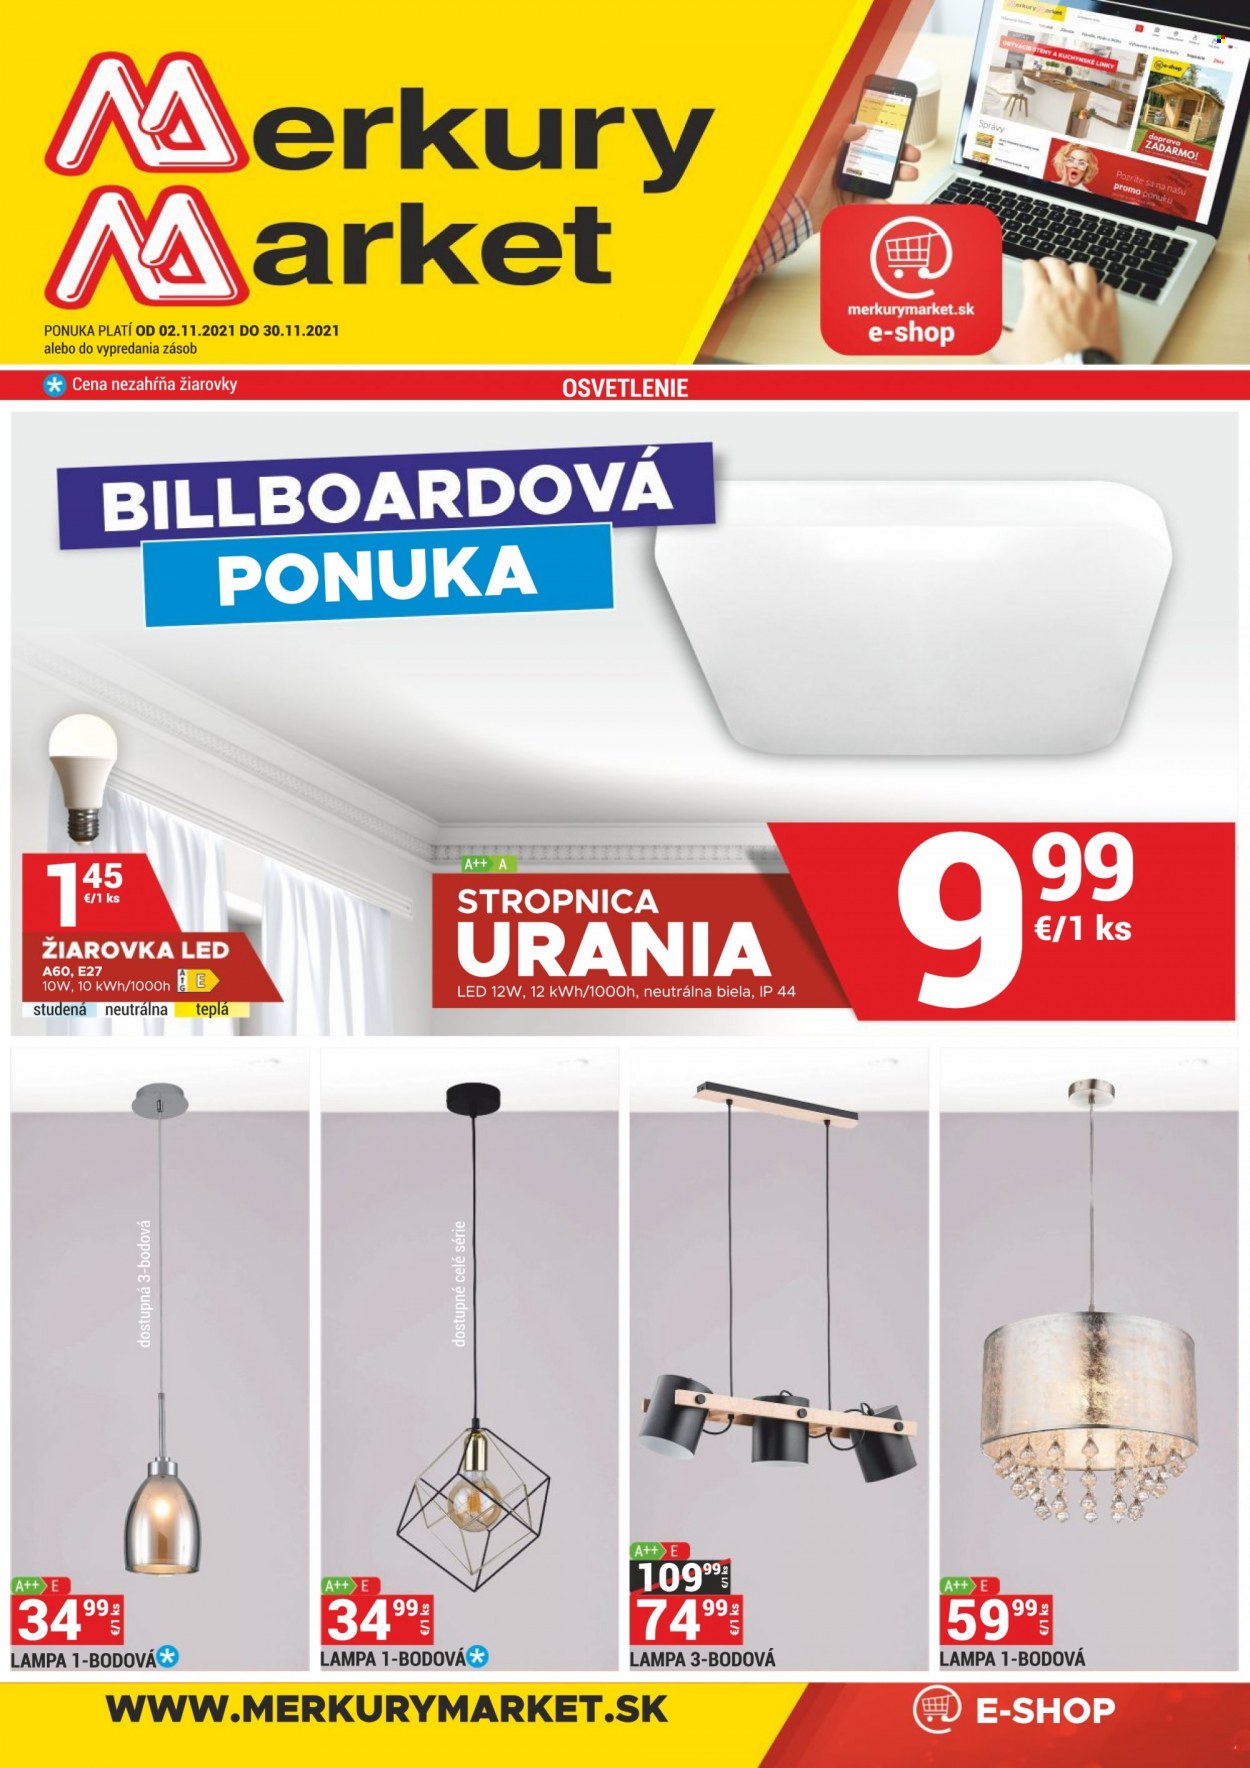 thumbnail - Leták Merkury Market - 2.11.2021 - 30.11.2021 - Produkty v akcii - LED žiarovka, kuchynská linka, lampa, stropné svietidlo. Strana 1.